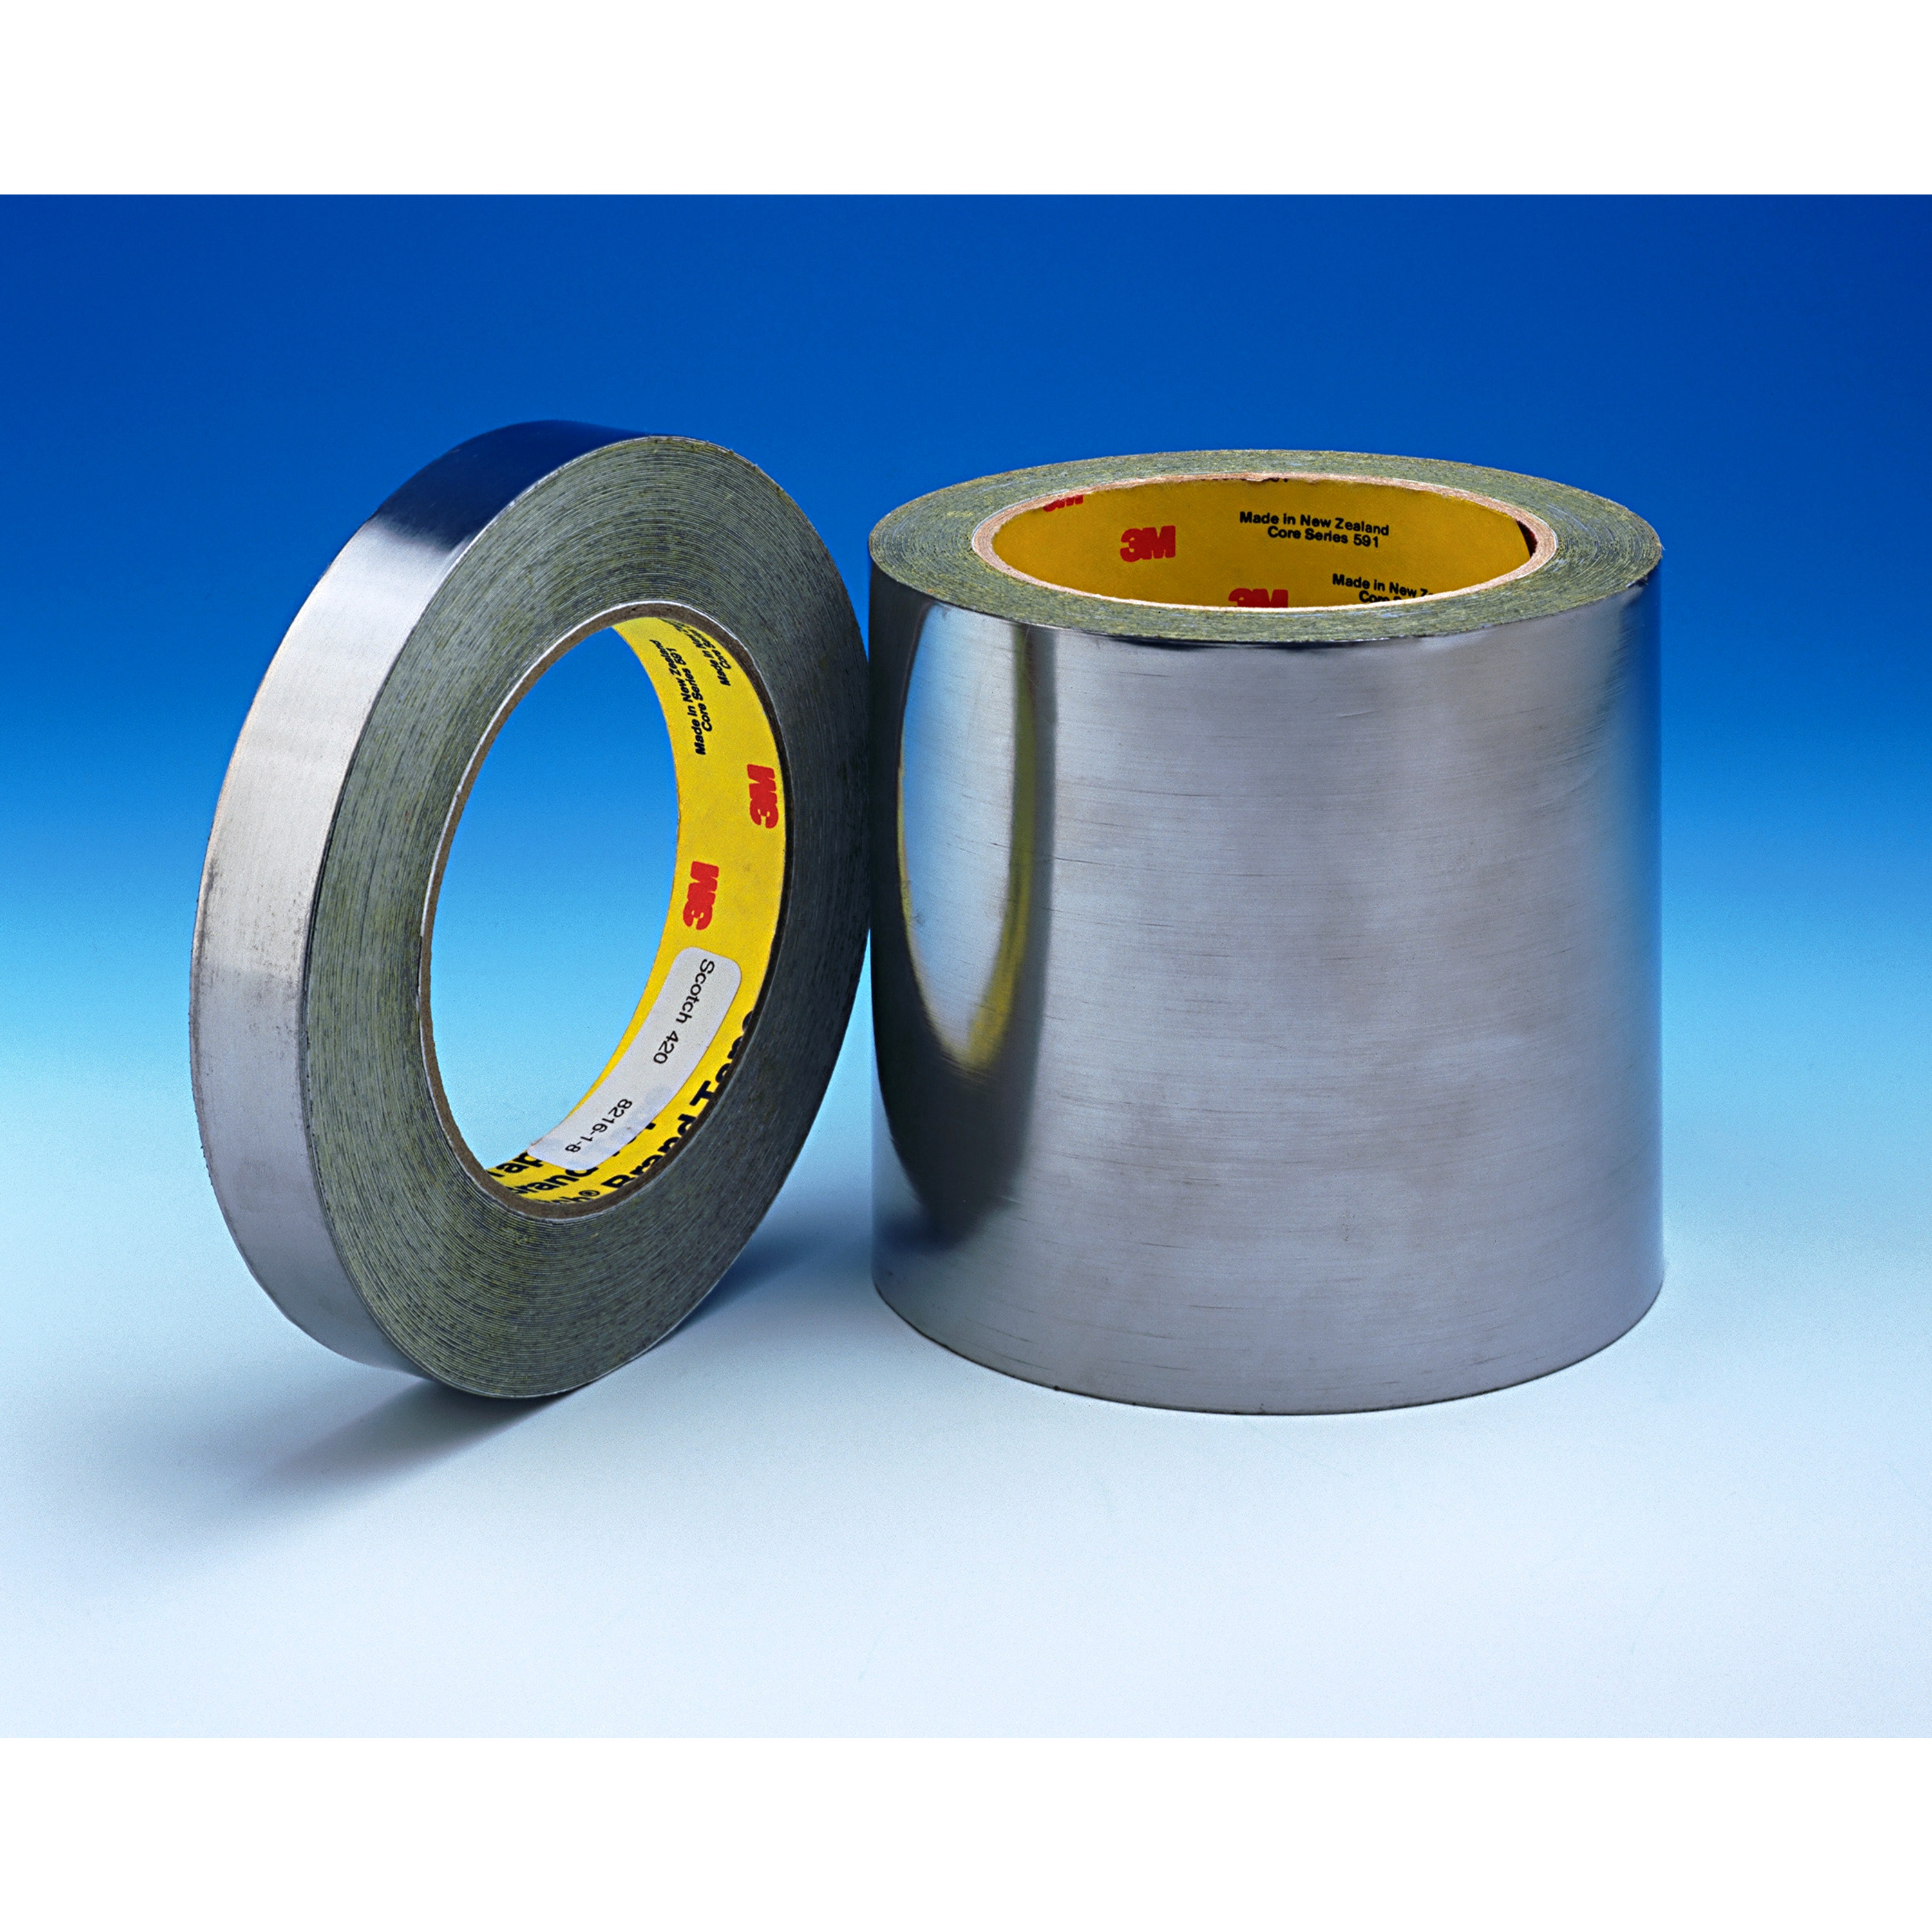 3M™ Lead Foil Tape 420, Dark Silver, 1/4 in x 36 yd, 6.8 mil, 1 roll per
case, Boxed